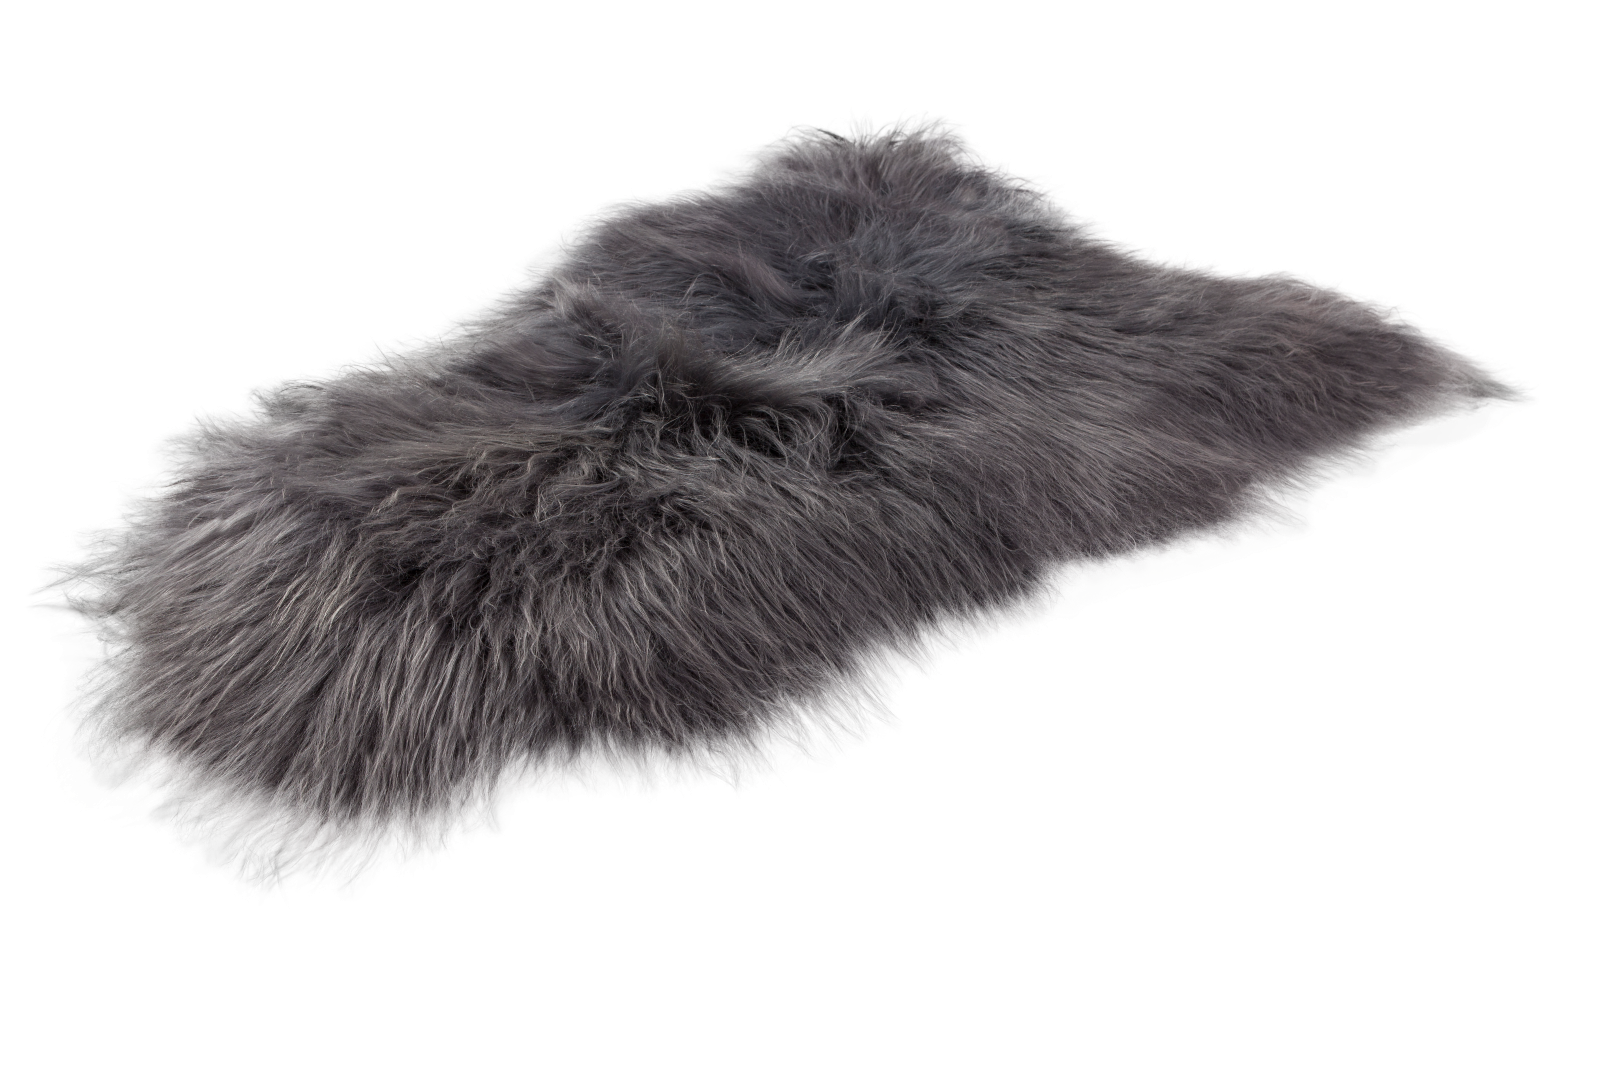 Islandschaffell Dunkelgrau | Lange Haare | 100 x 65 cm